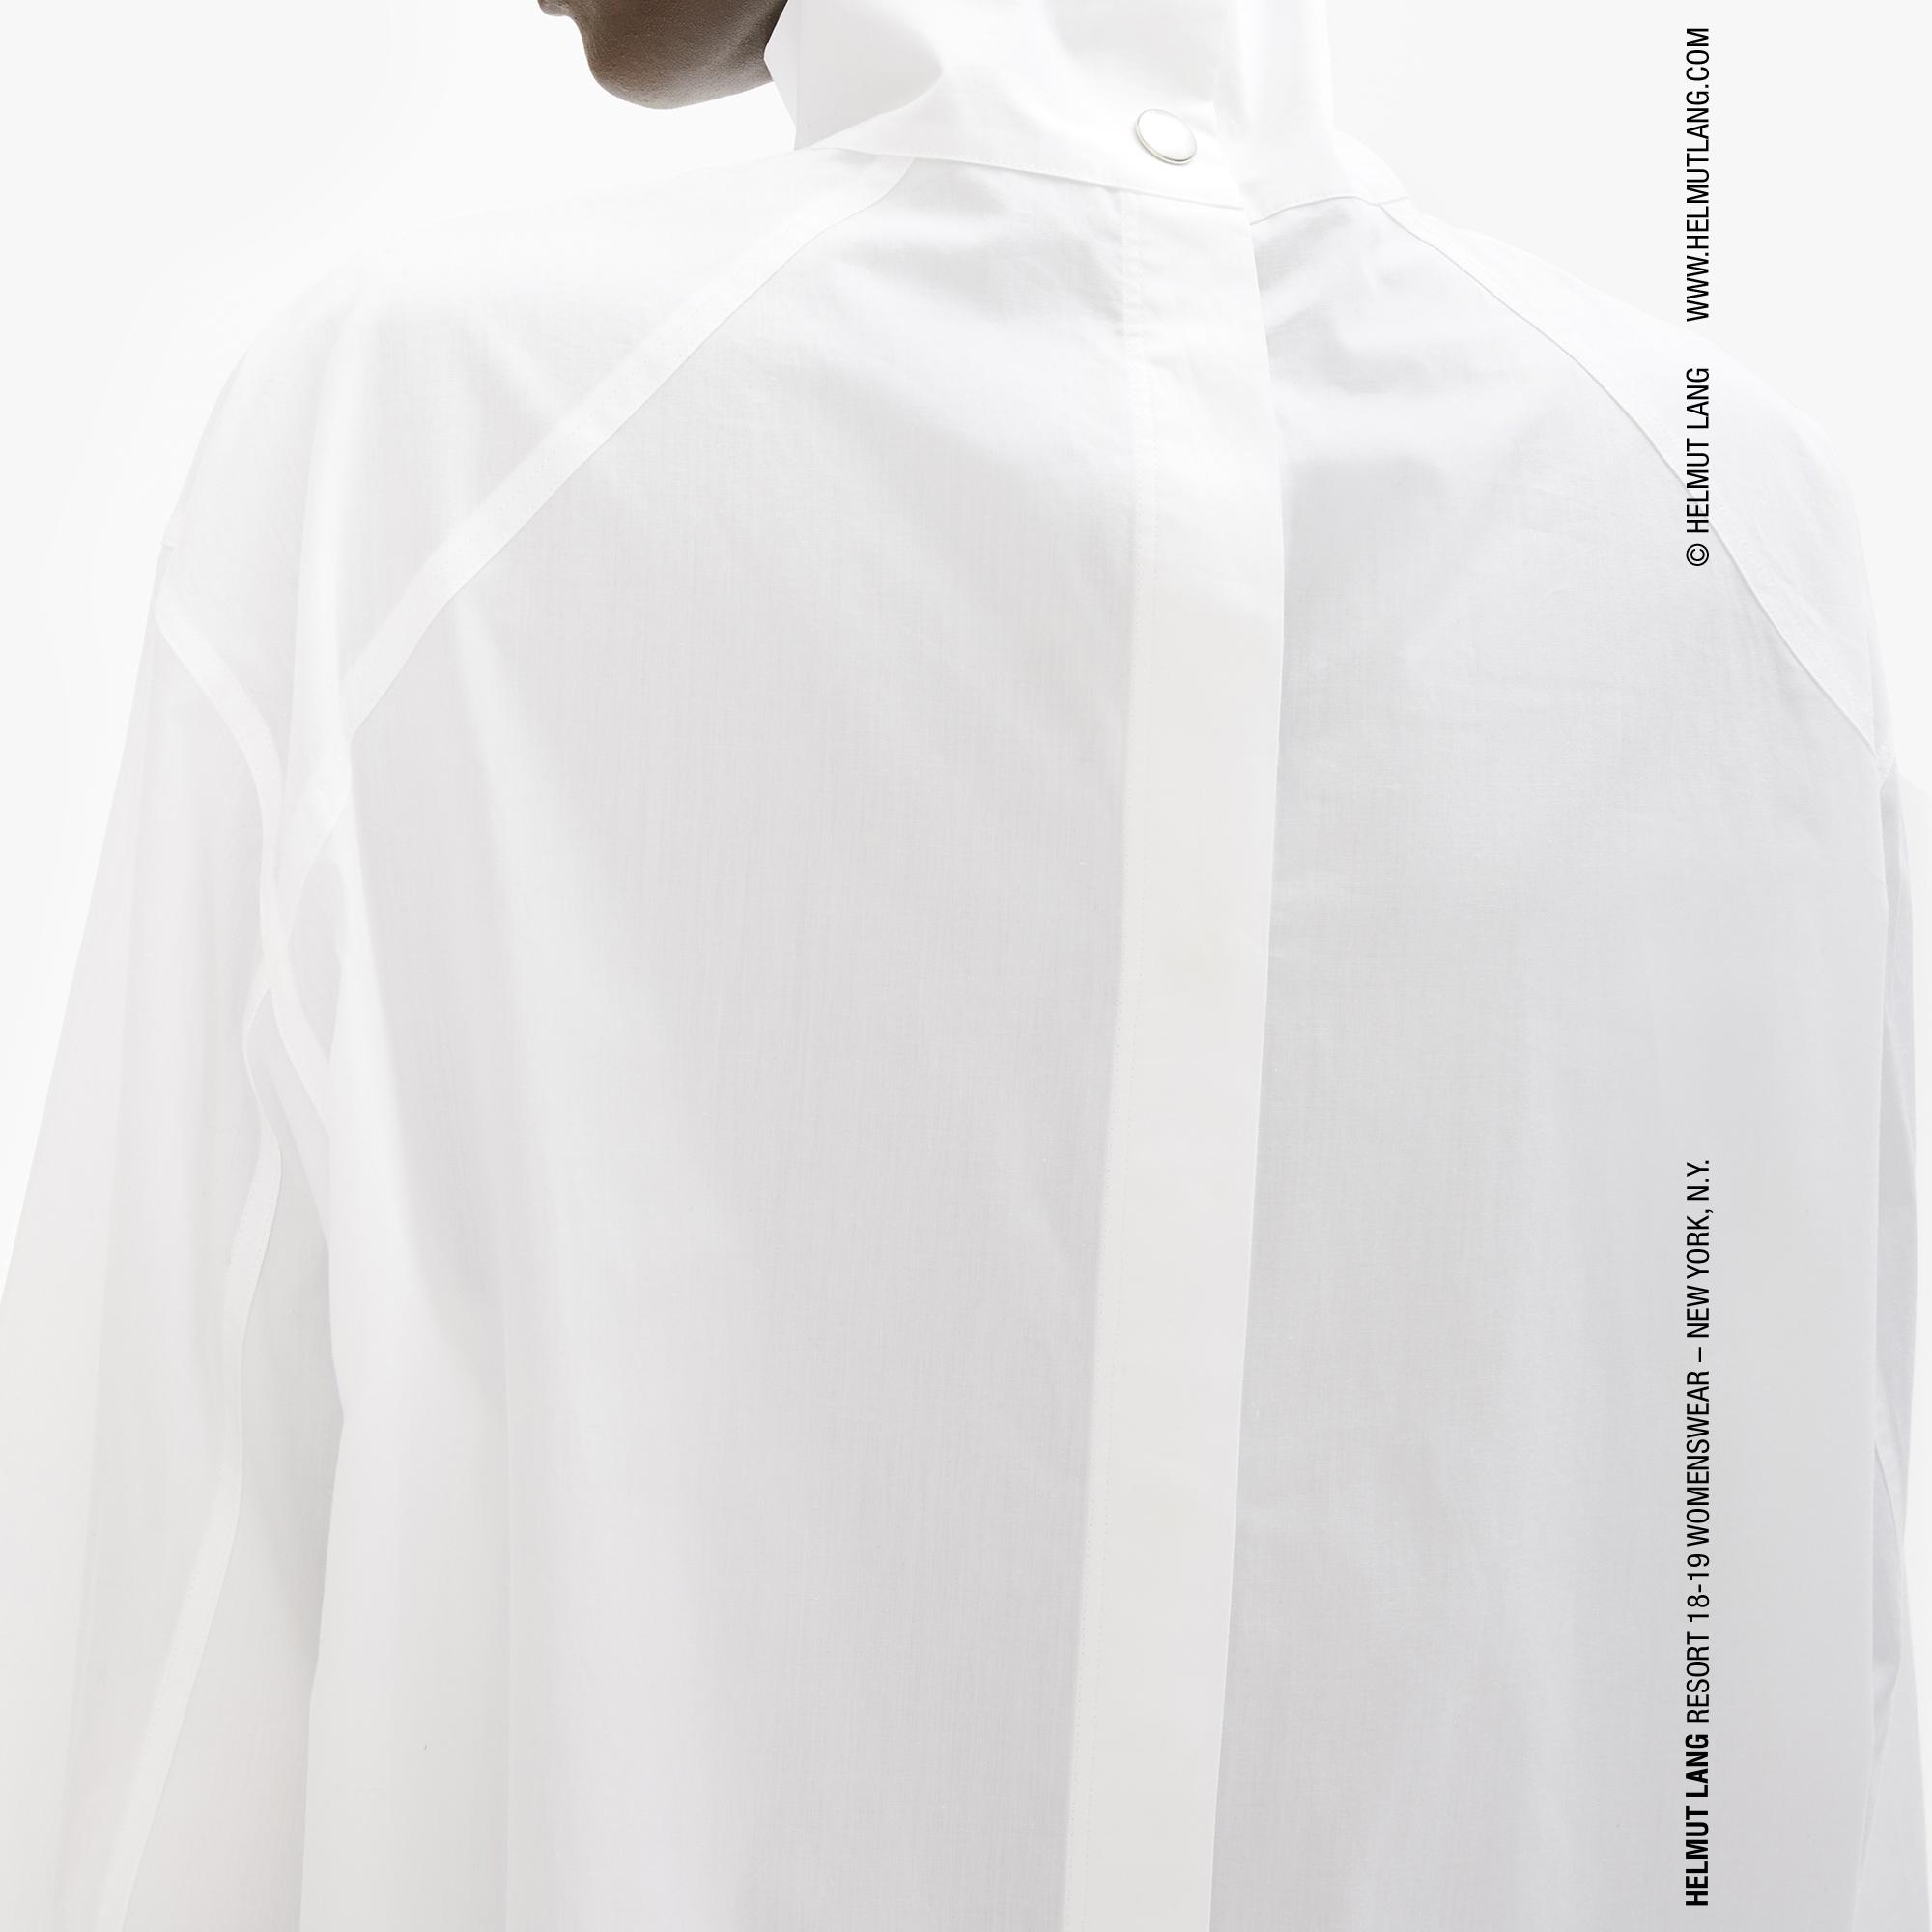 Helmut Lang White High Neck Utilitarian Shirt | WWW.HELMUTLANG.COM ...